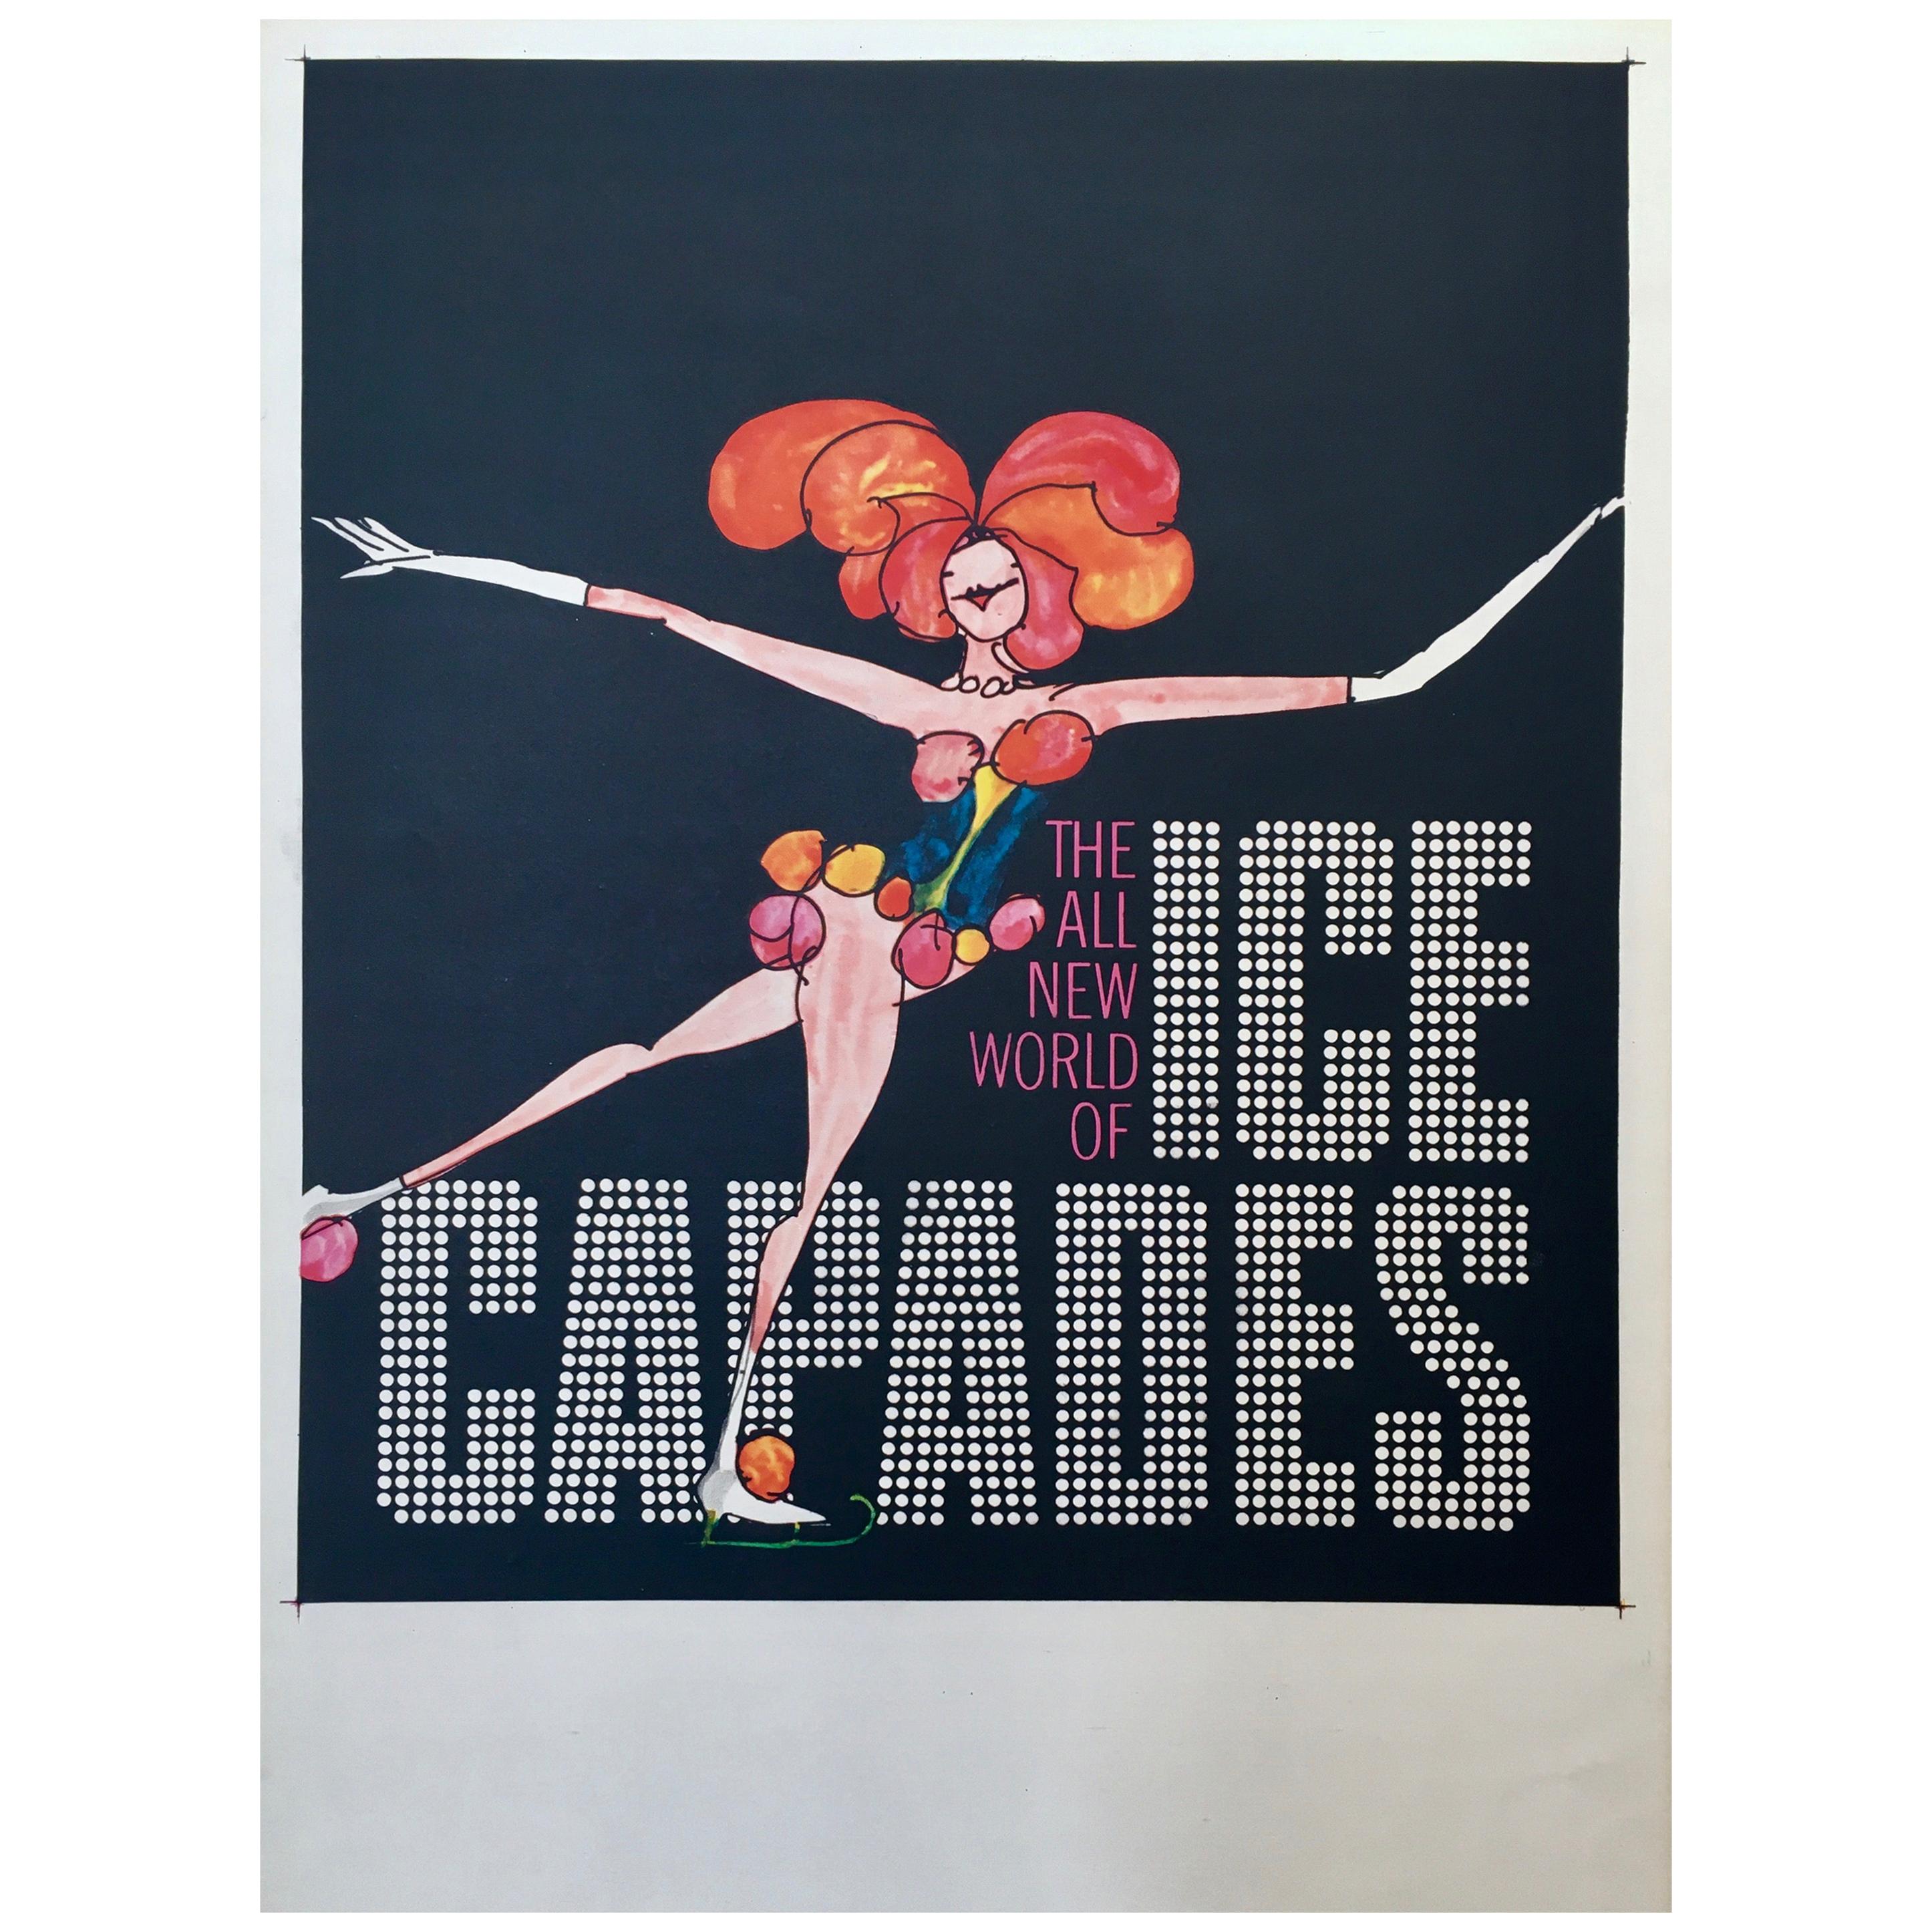 Ice Capades Entertainment Show Original Vintage Ice Skating Poster, 1969